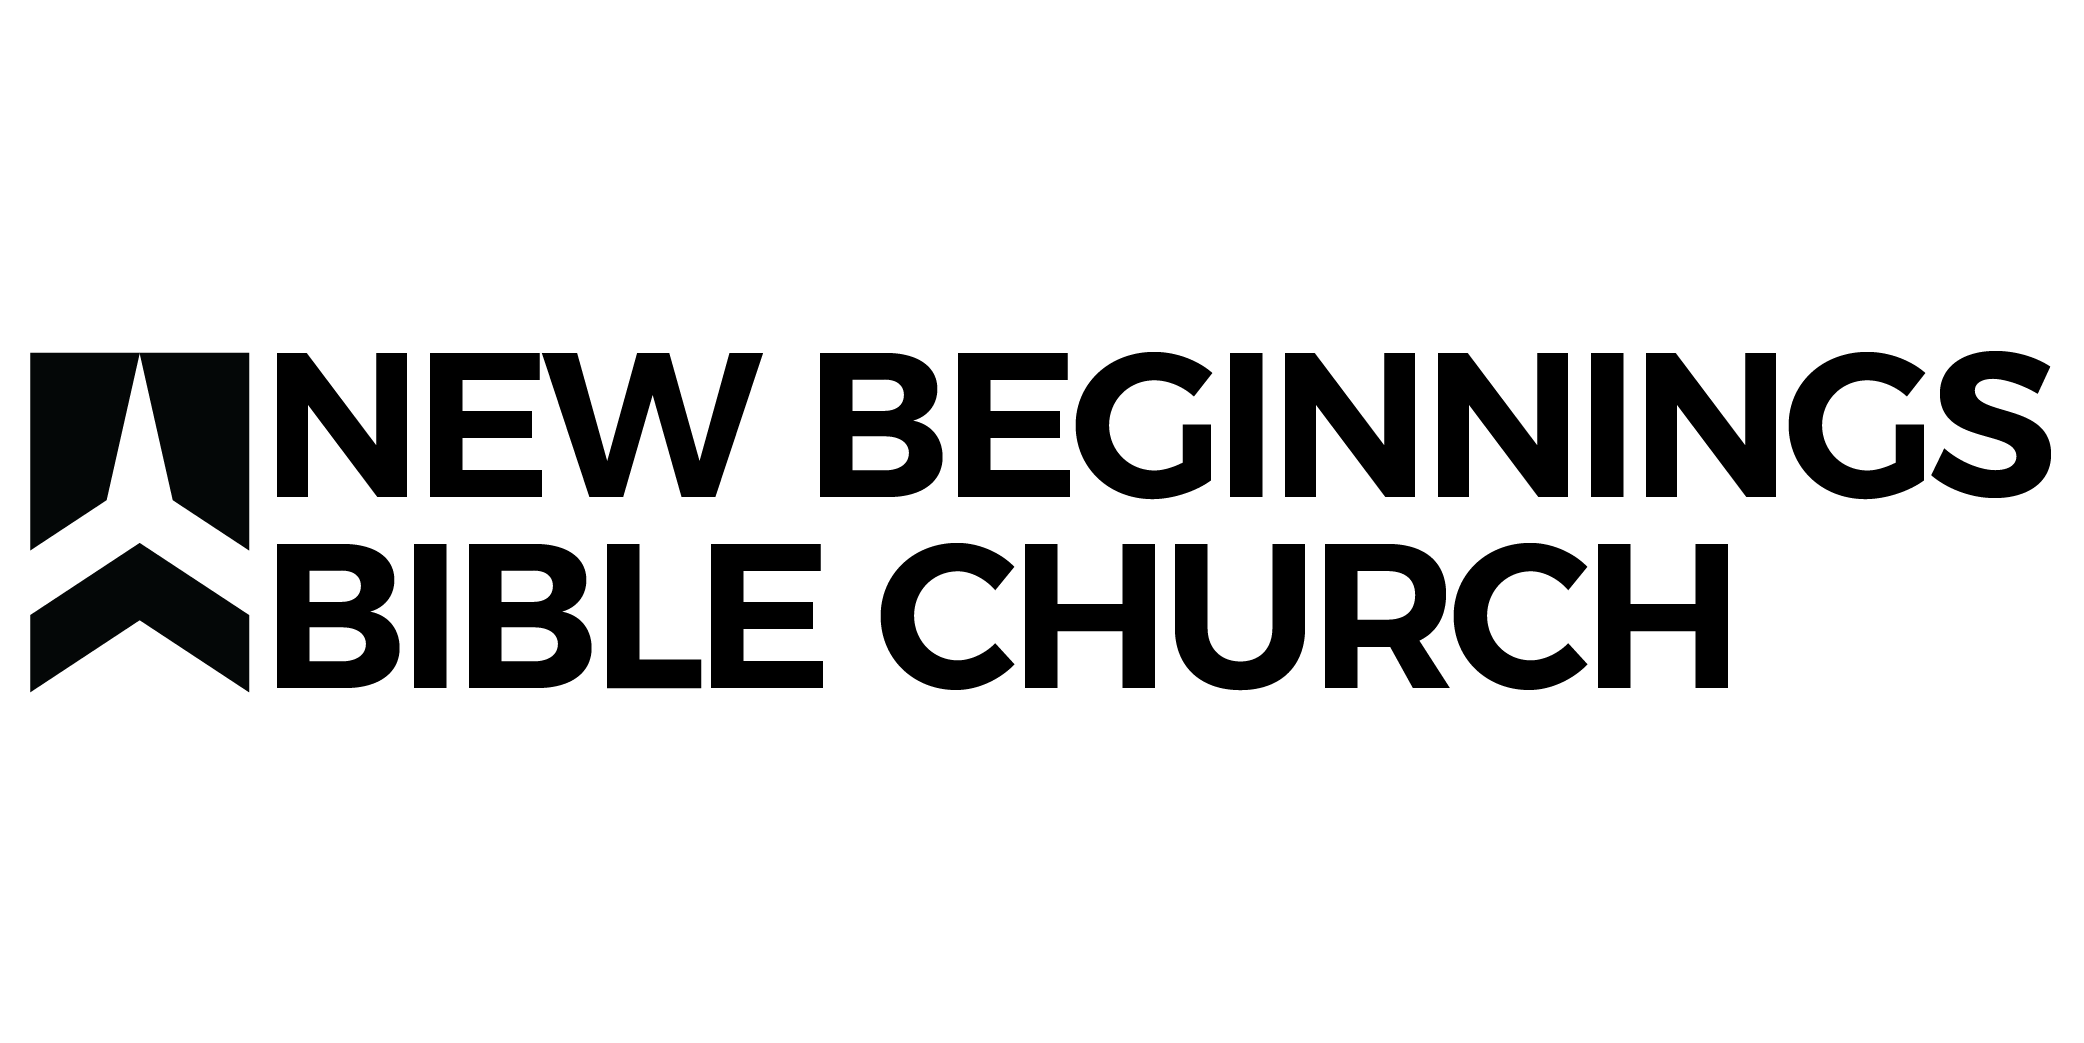 New Beginnings Bible Church, Flanders, NJ